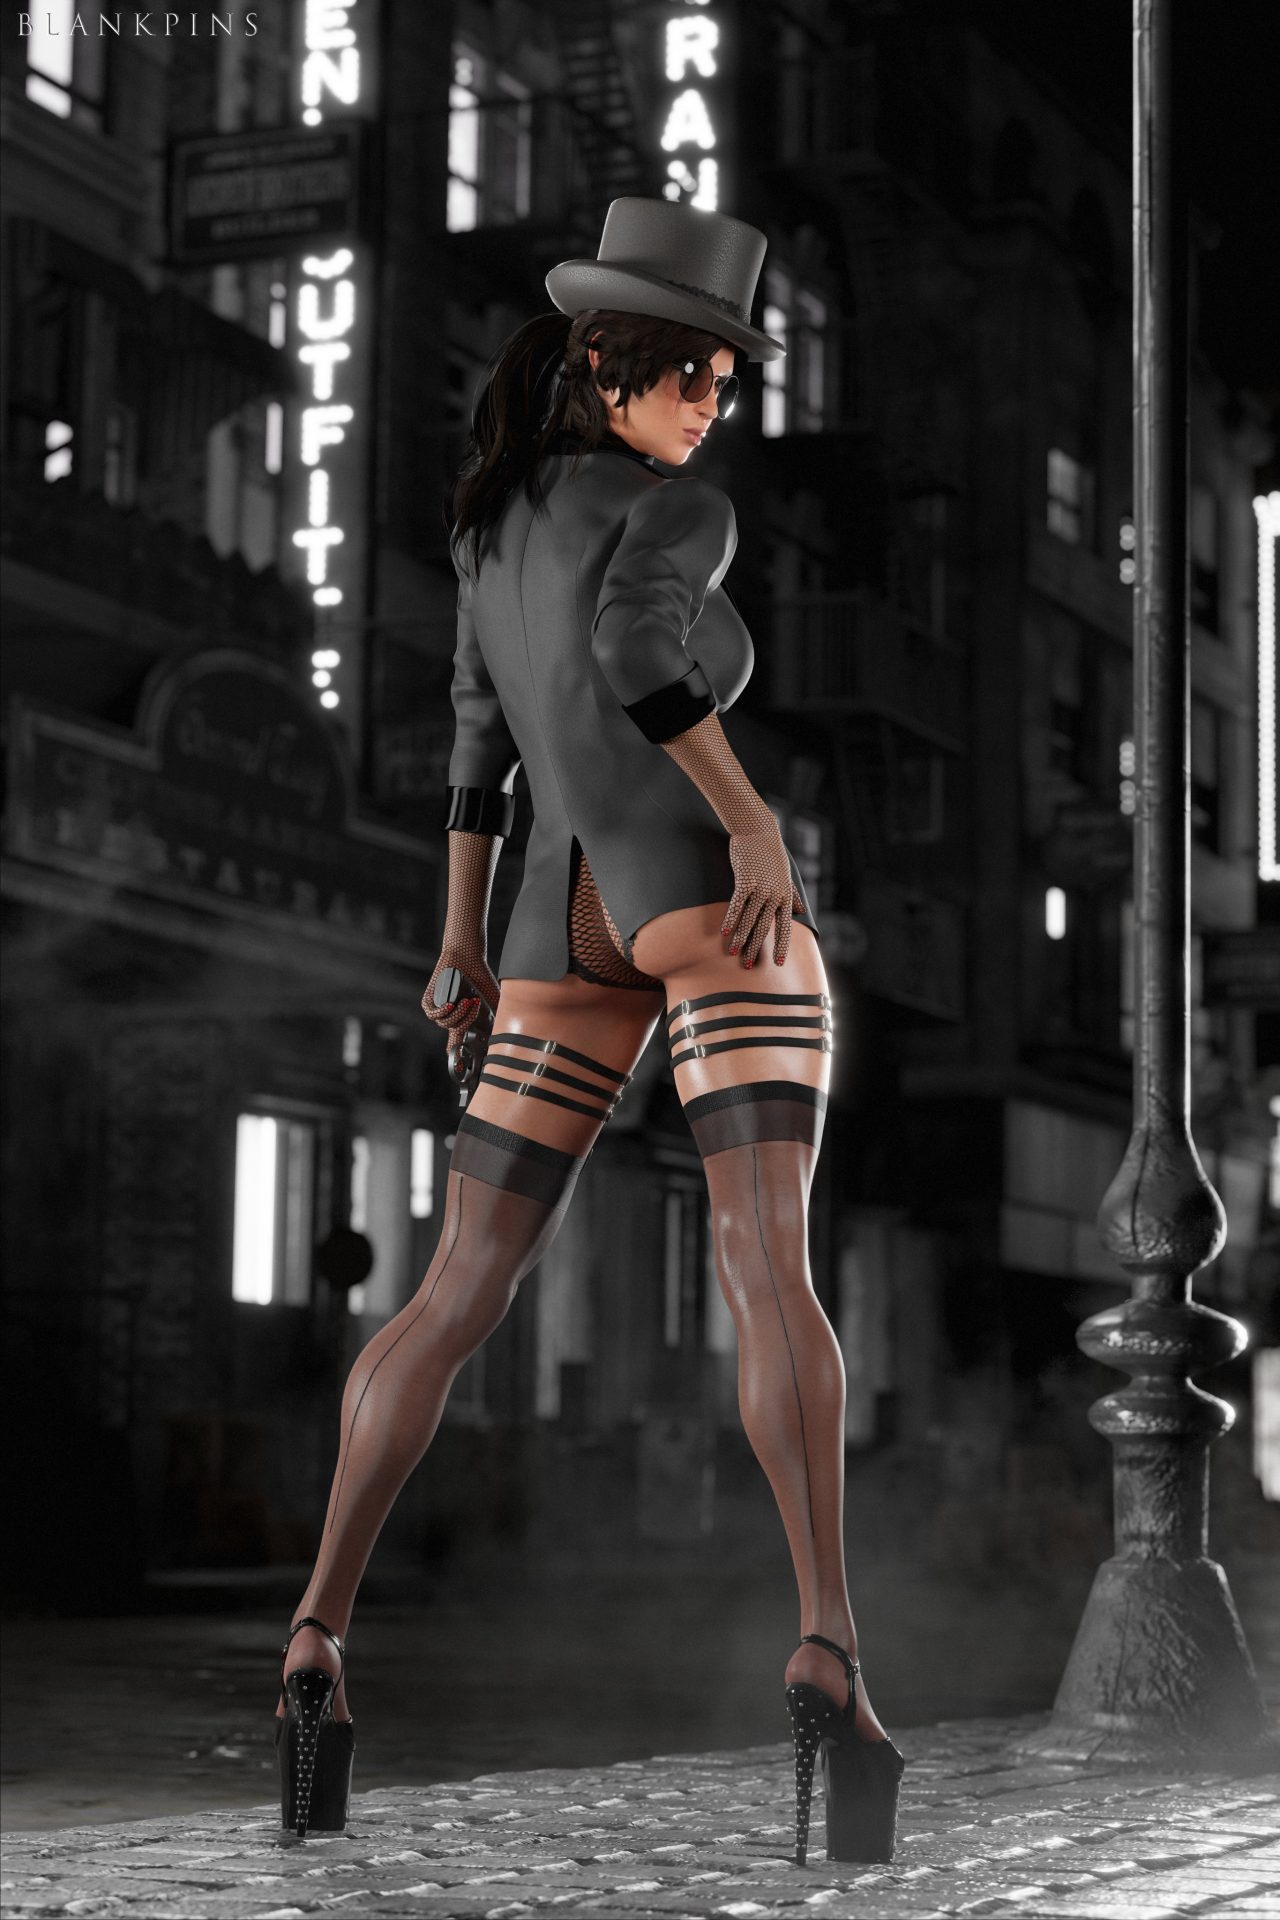 Lara in fishnet tights